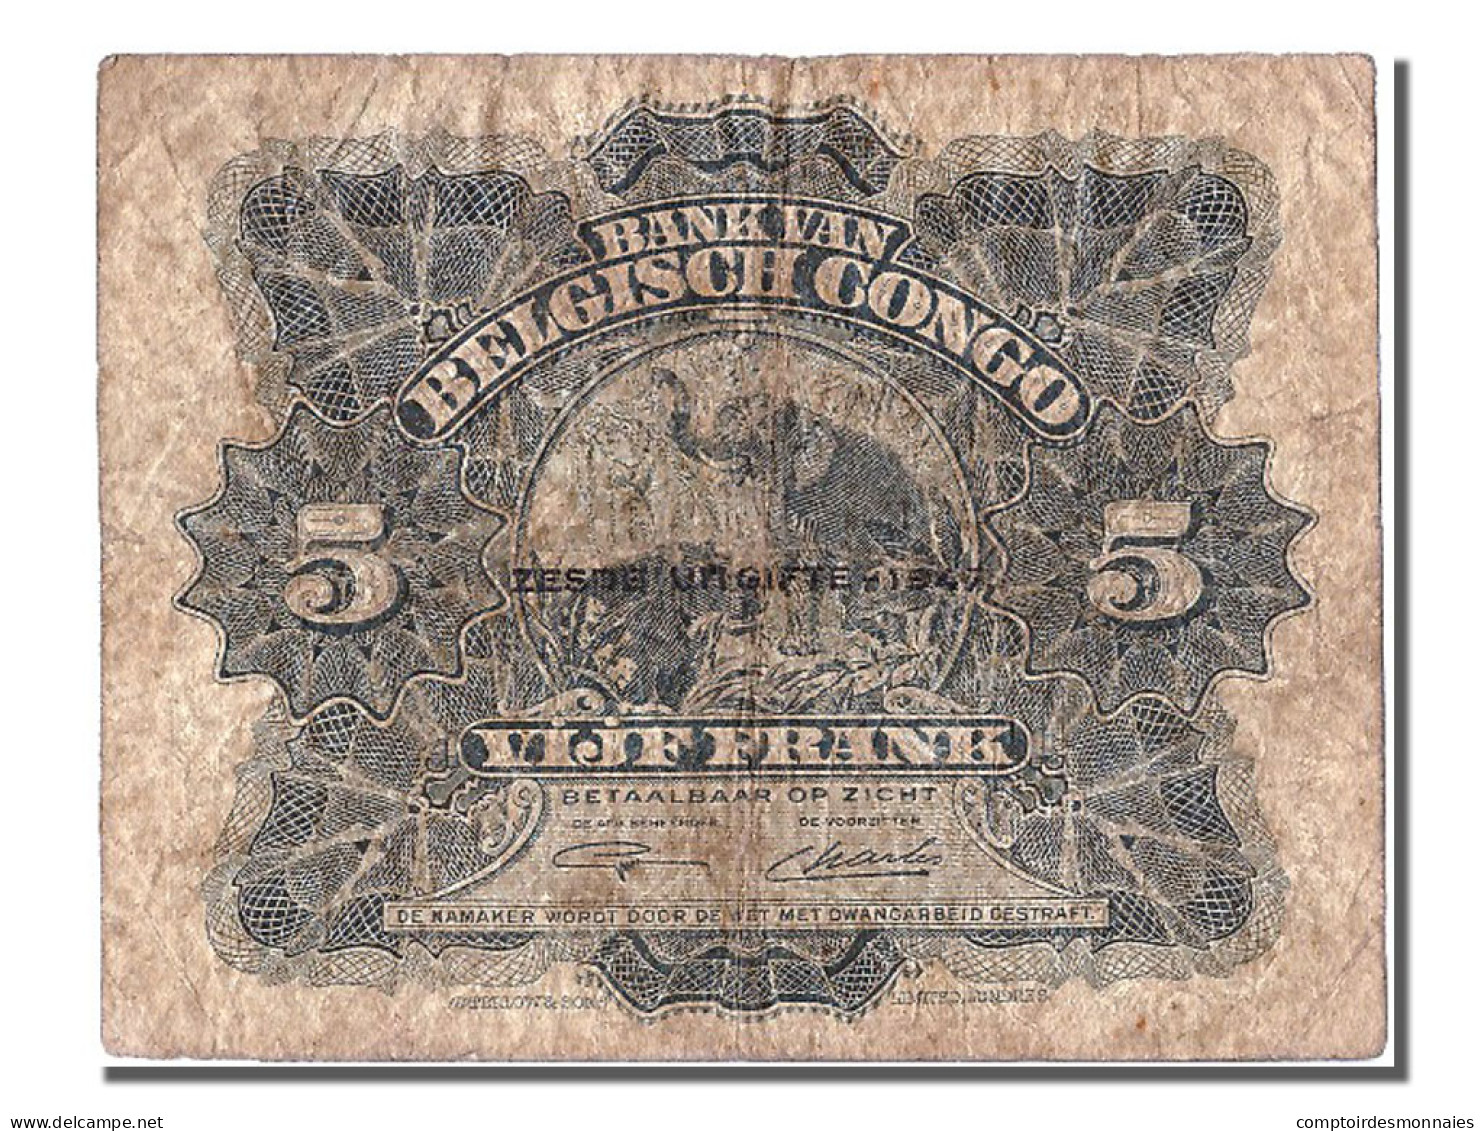 Billet, Congo Belge, 5 Francs, 1947, 1947-04-10, TB - Banque Du Congo Belge